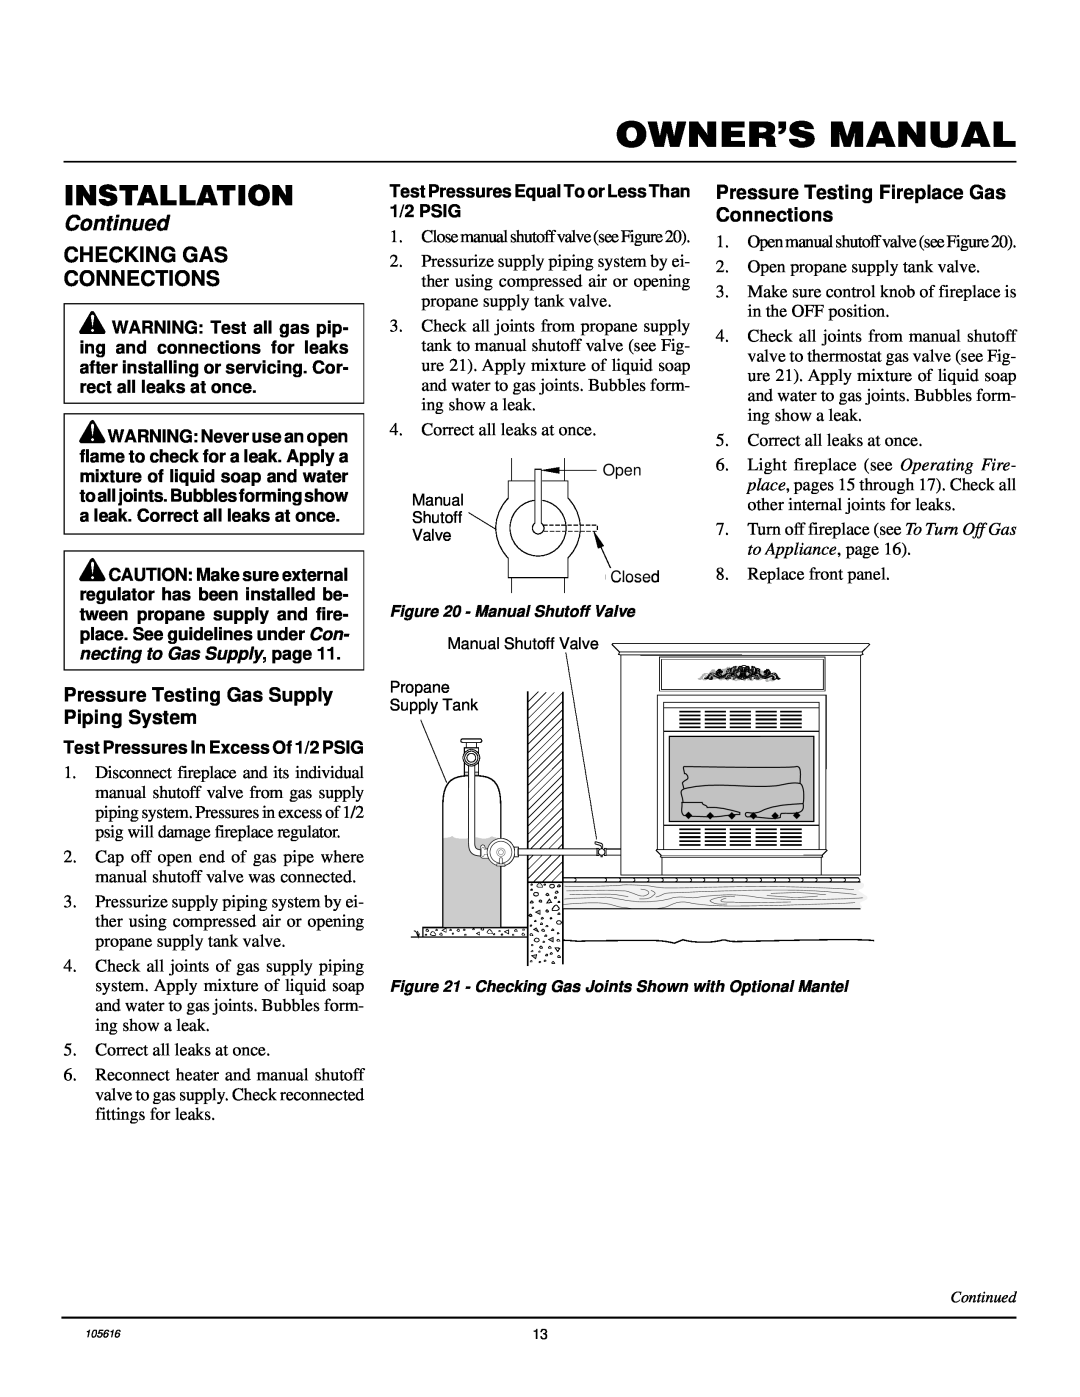 Desa CGCF26PRA installation manual Installation, Continued, Test Pressures In Excess Of 1/2 PSIG 